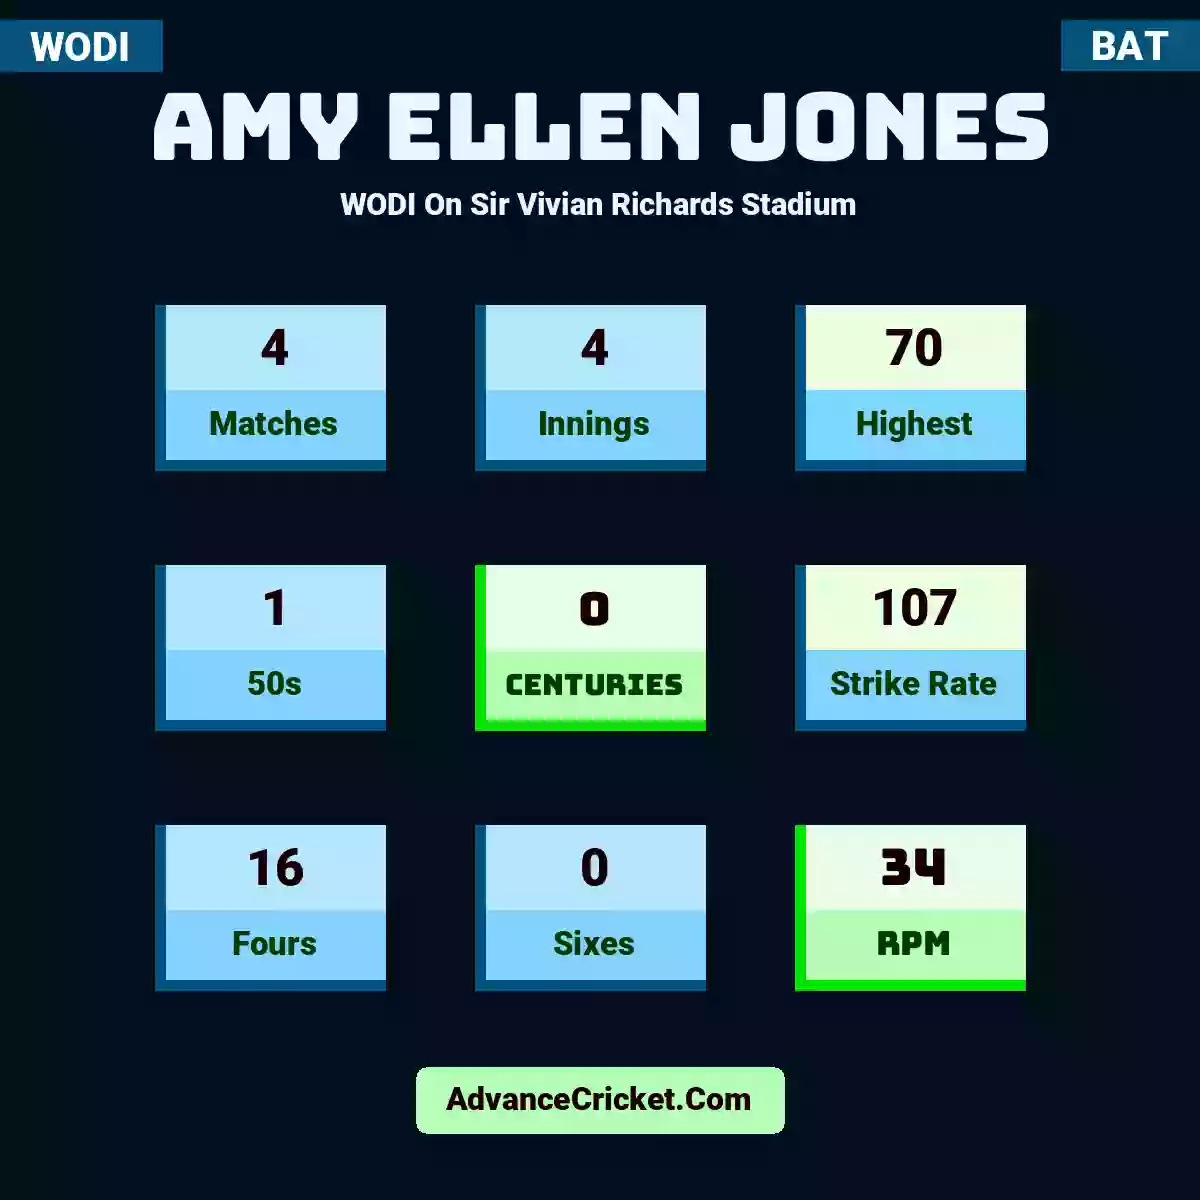 Amy Ellen Jones WODI  On Sir Vivian Richards Stadium, Amy Ellen Jones played 4 matches, scored 70 runs as highest, 1 half-centuries, and 0 centuries, with a strike rate of 107. A.Jones hit 16 fours and 0 sixes, with an RPM of 34.